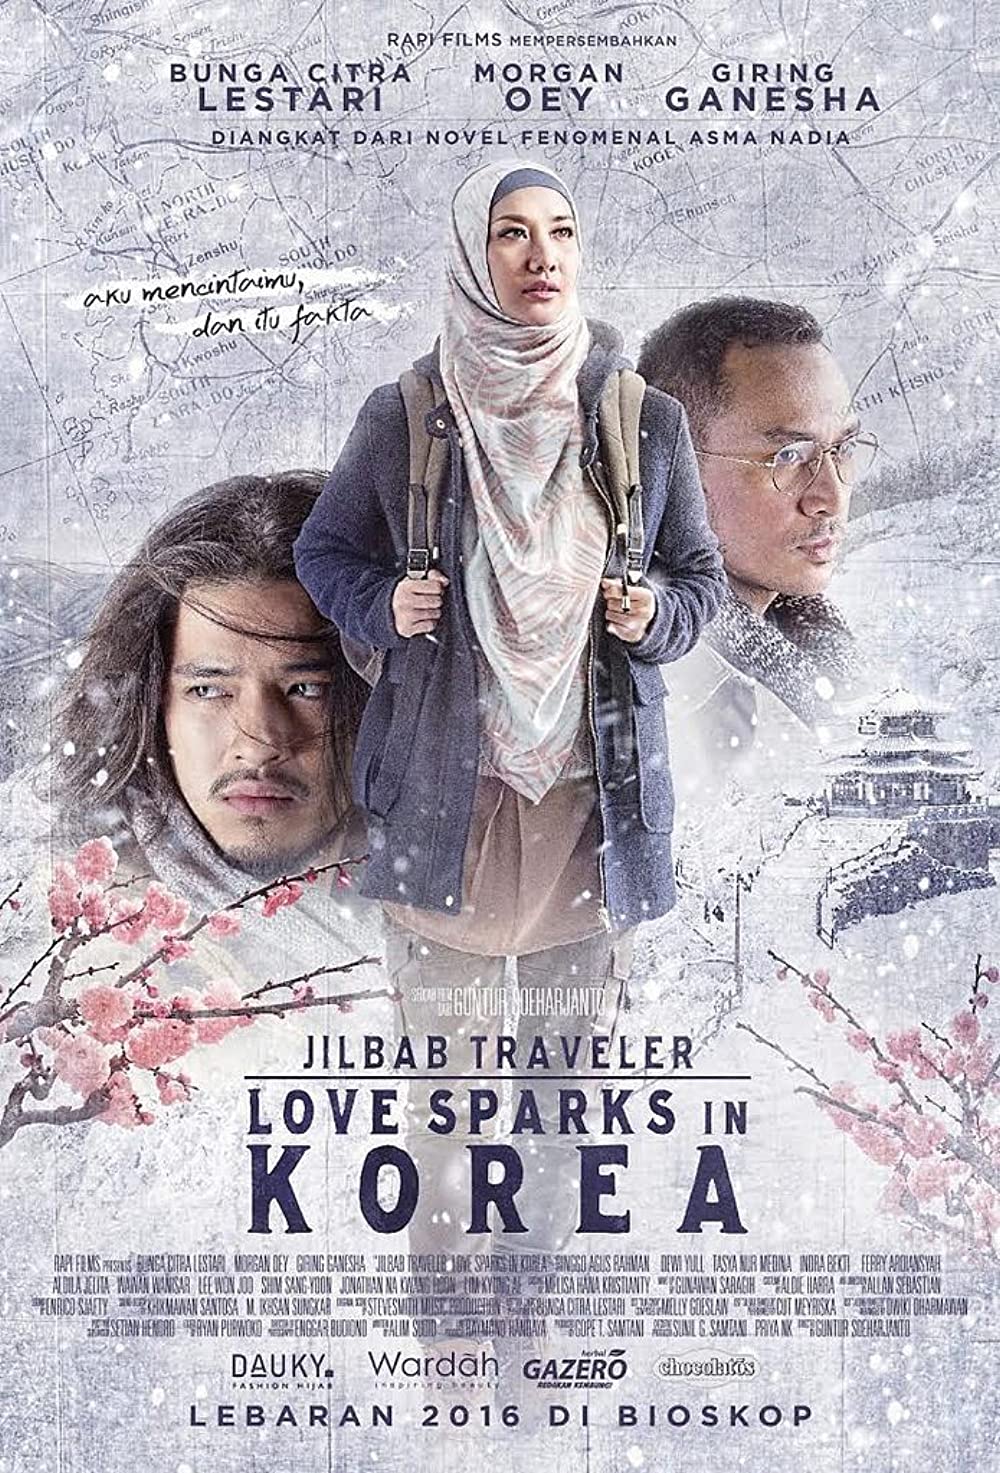 9 Film Netflix bertema islami, cocok ditonton saat bulan Ramadhan